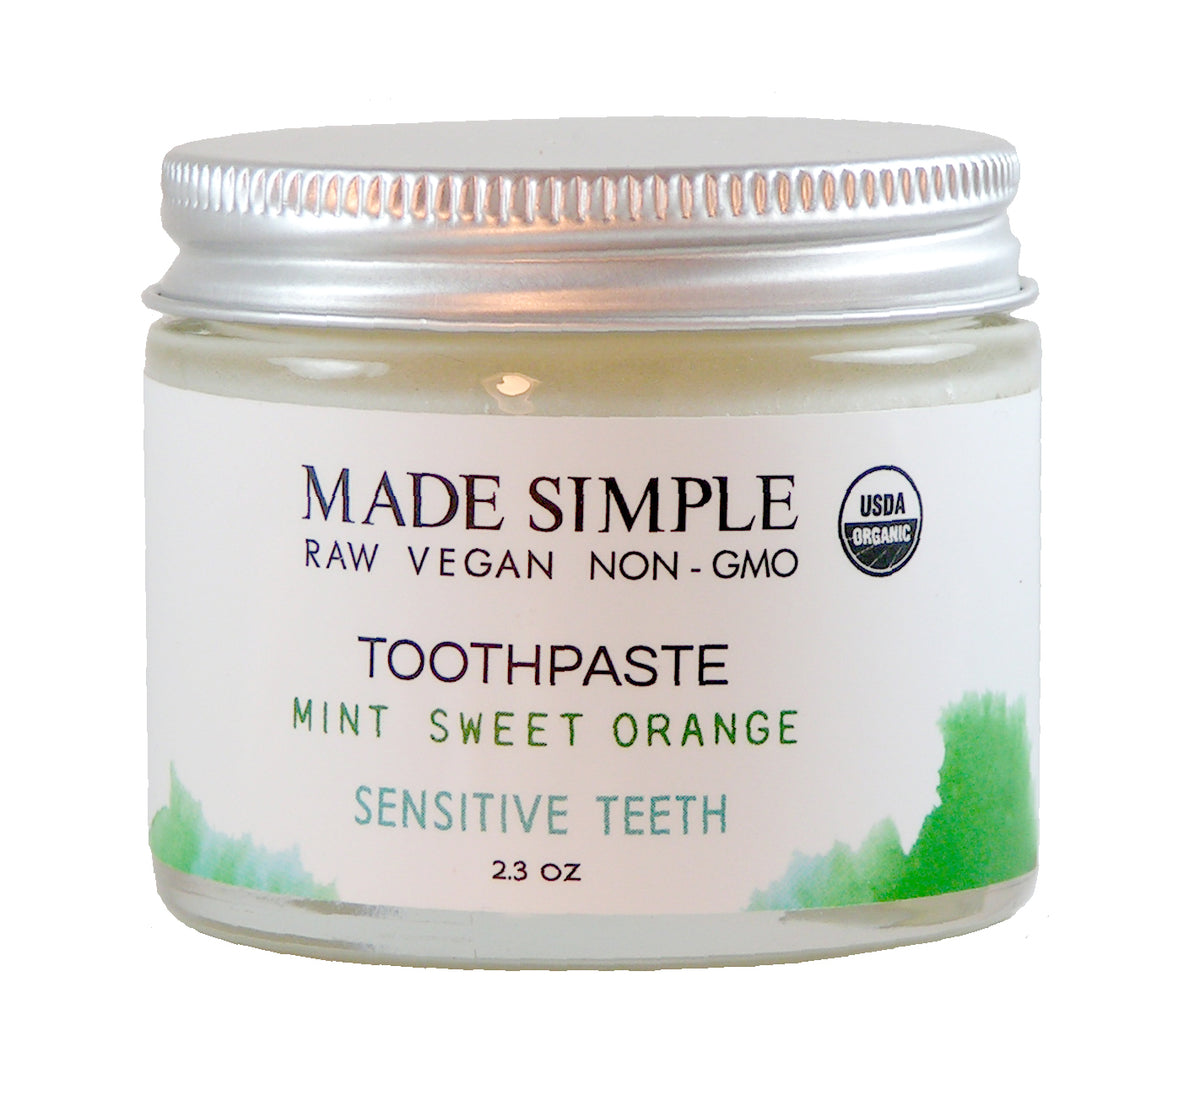 Certified Organic Mint Sweet Orange Toothpaste